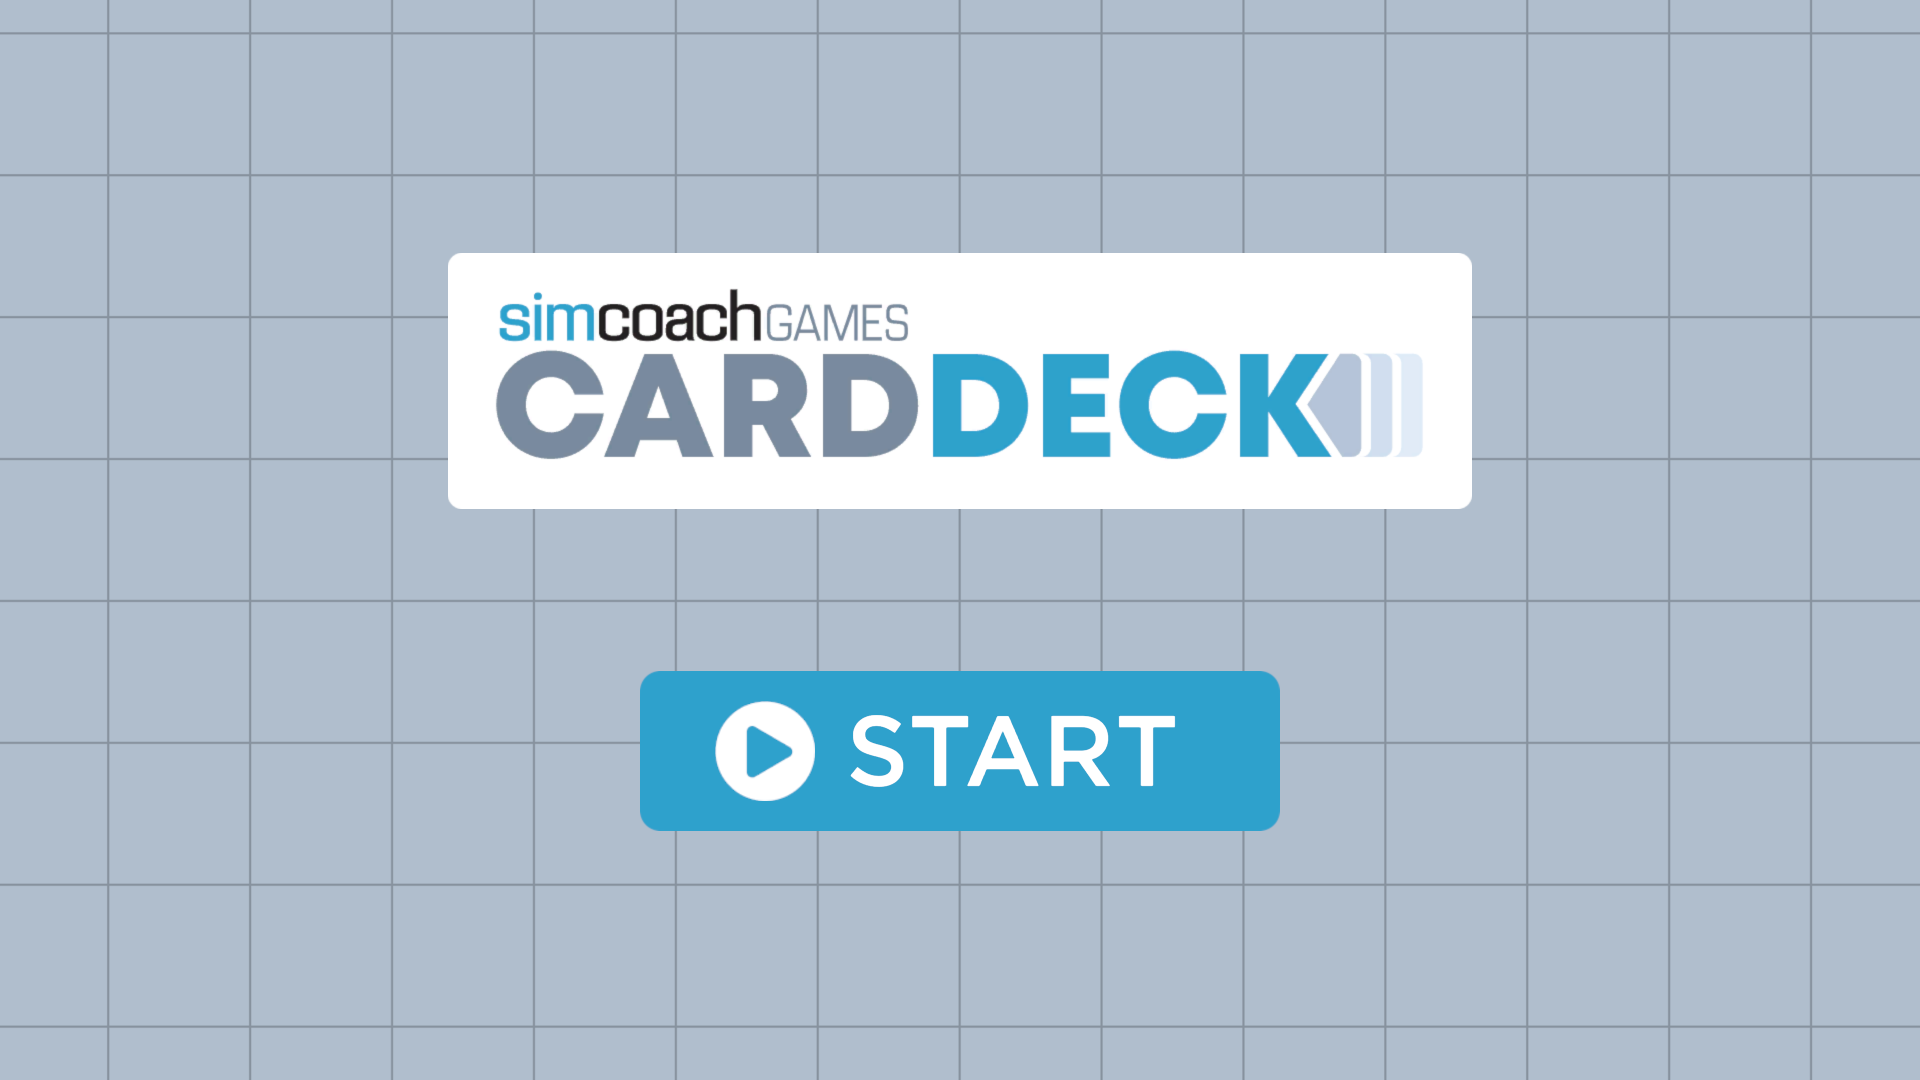 Simcoach Card Deck